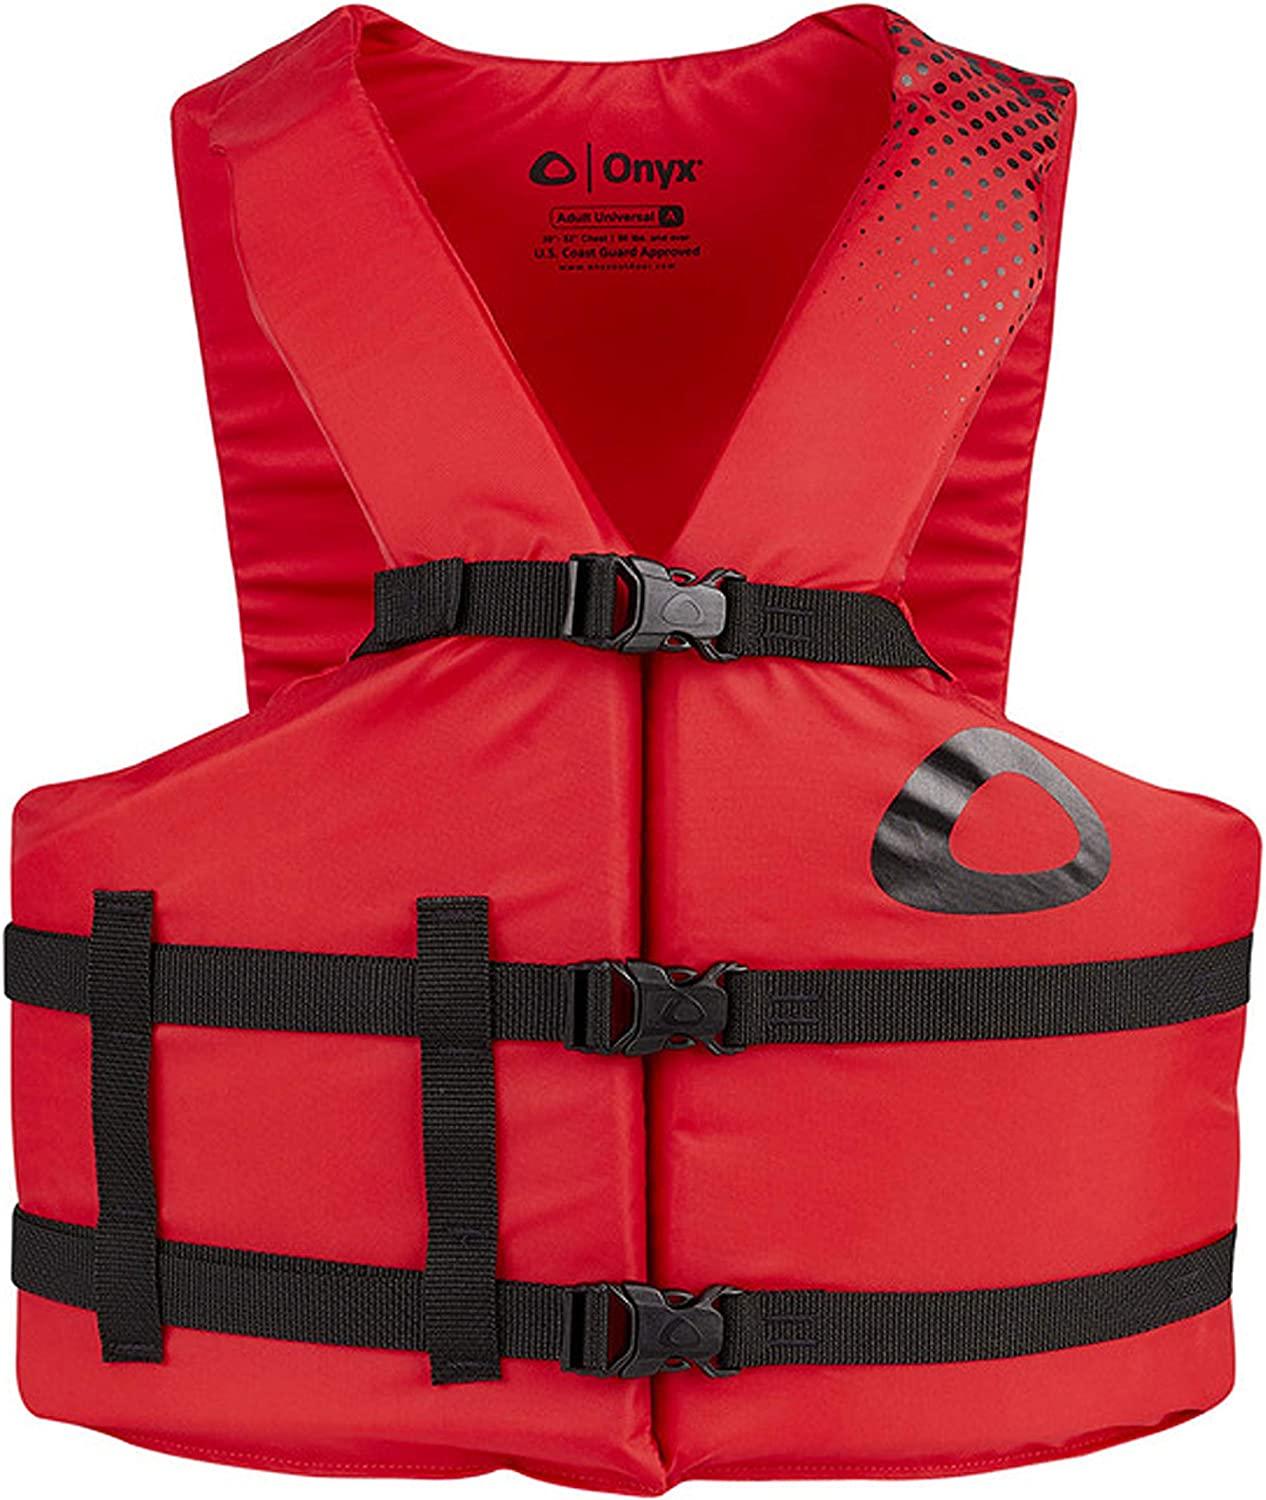  Onyx General Purpose Comfort Life Jacket Red Oversize